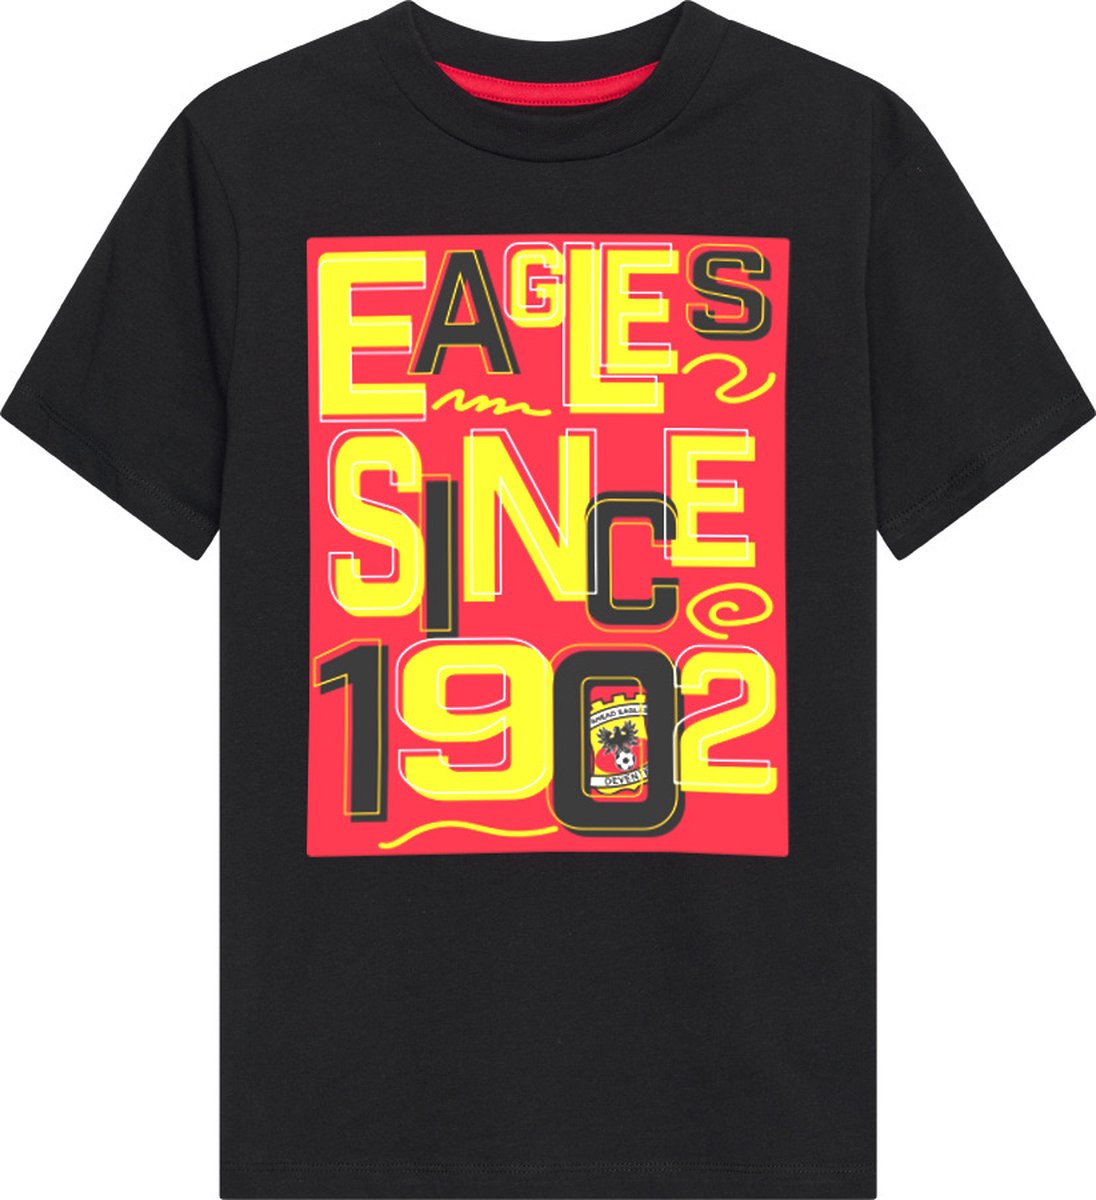 Eagles kids T-shirt - Voetbalshirts kinderen - Go Ahead Eagles - maat 104